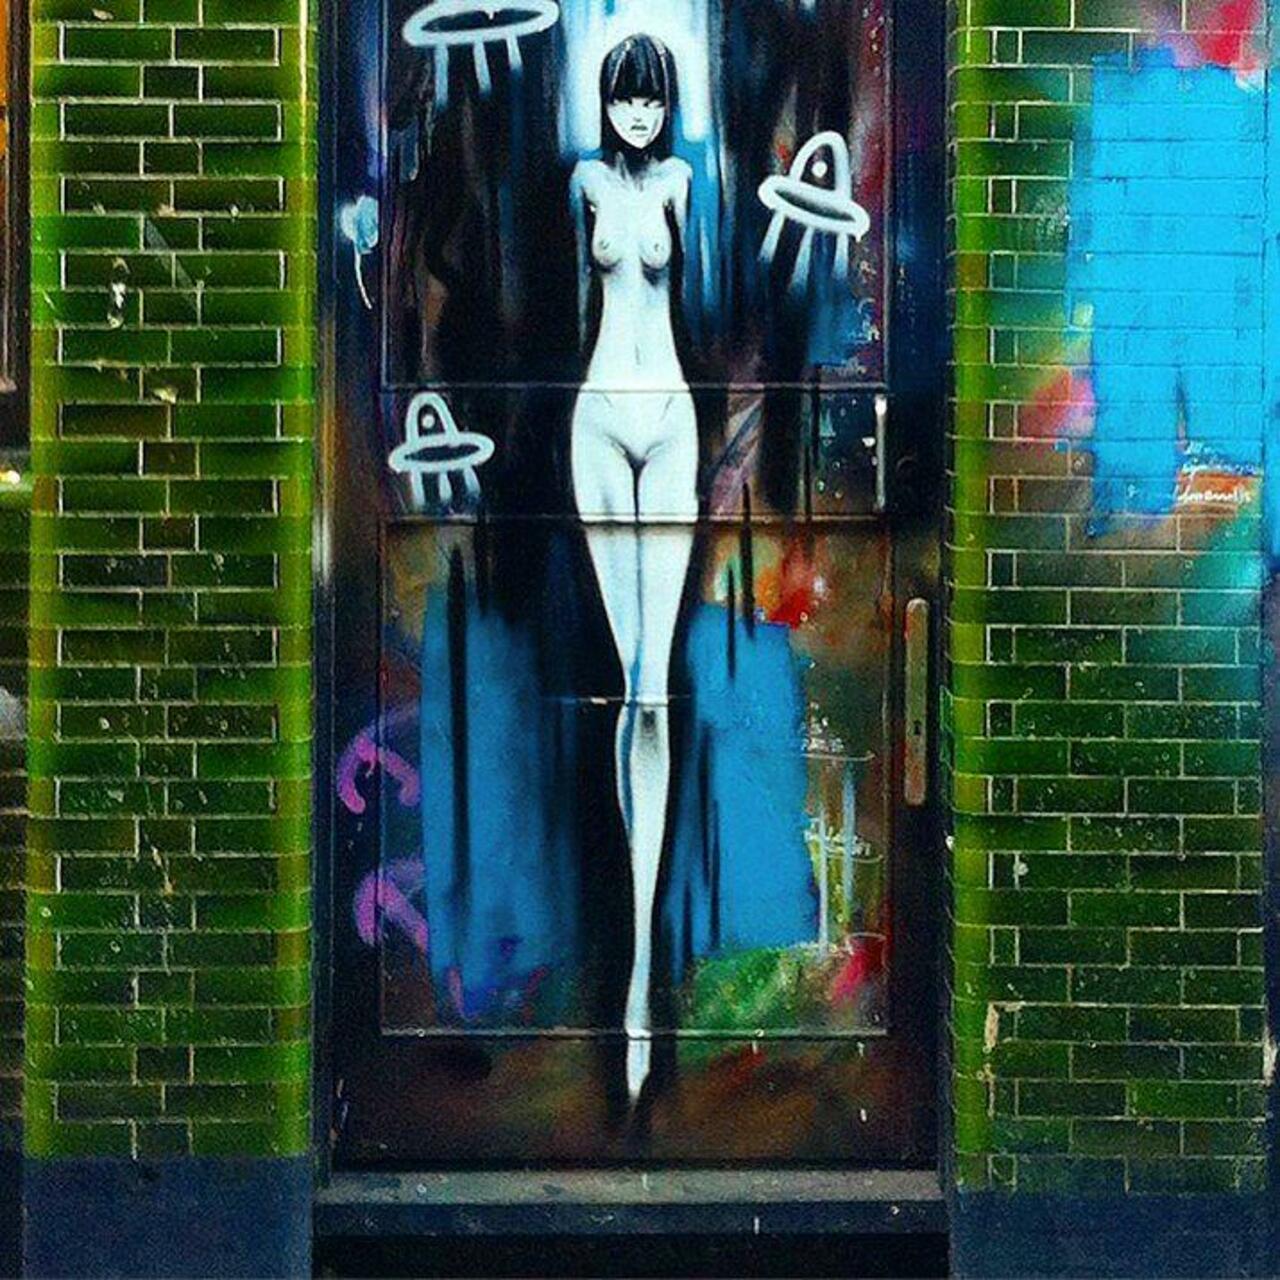 RT @StArtEverywhere: Street Art  #Graffiti #StreetArt #UrbanArt #WhoDidThis #BuxtonStreet #Shoreditch #London #iPhone4 #tv_streetart #r… http://t.co/9VO1ytwgPD